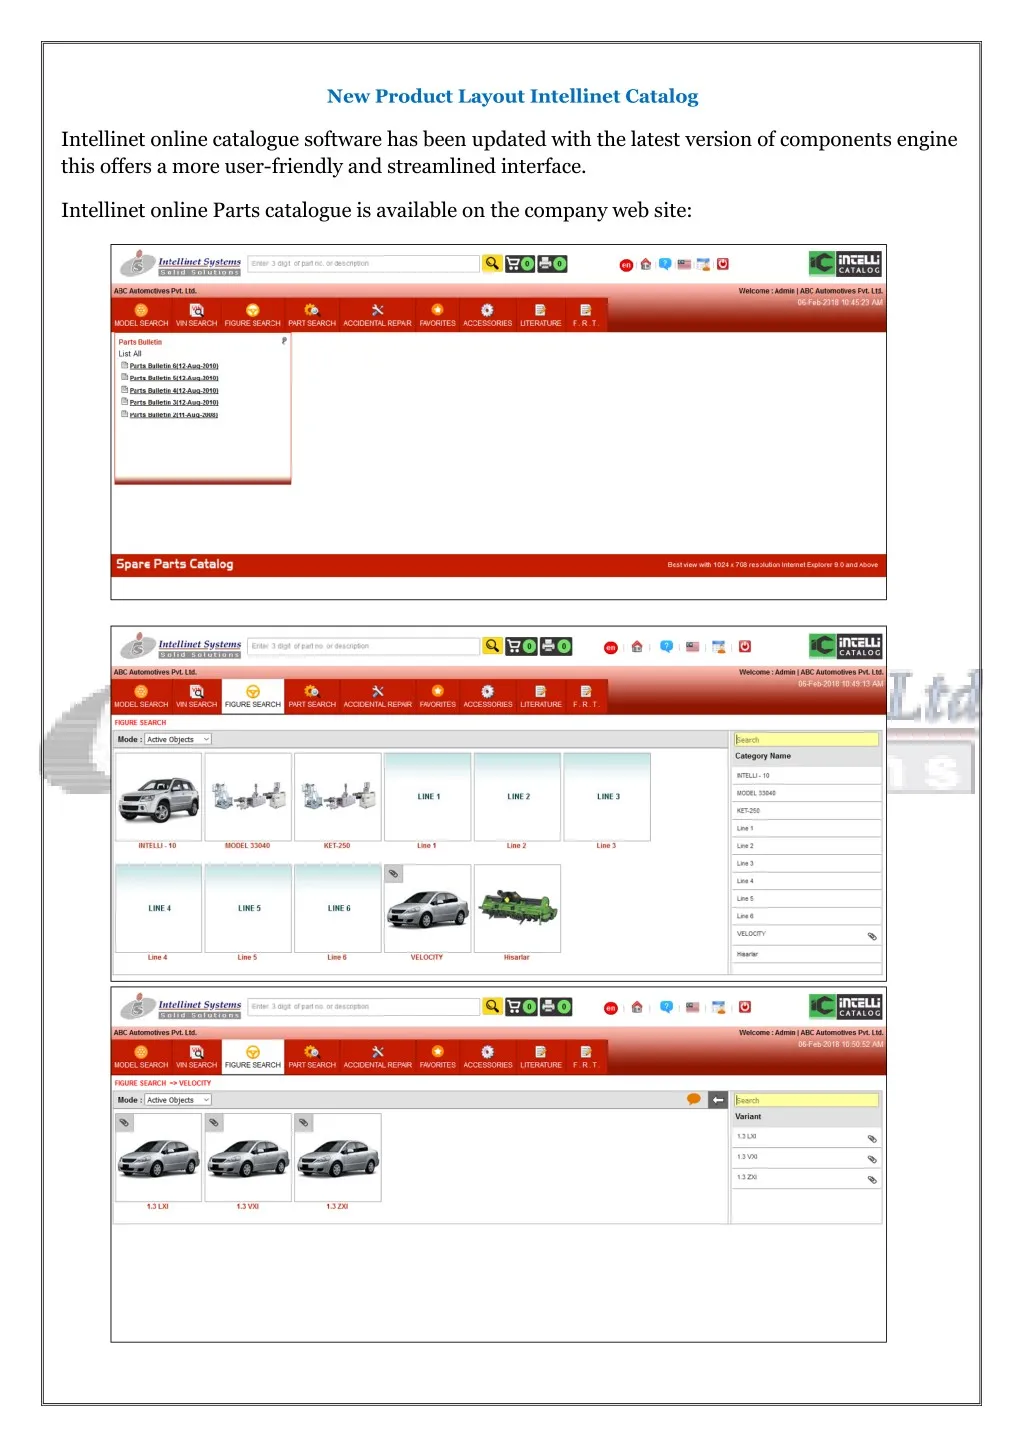 new product layout intellinet catalog